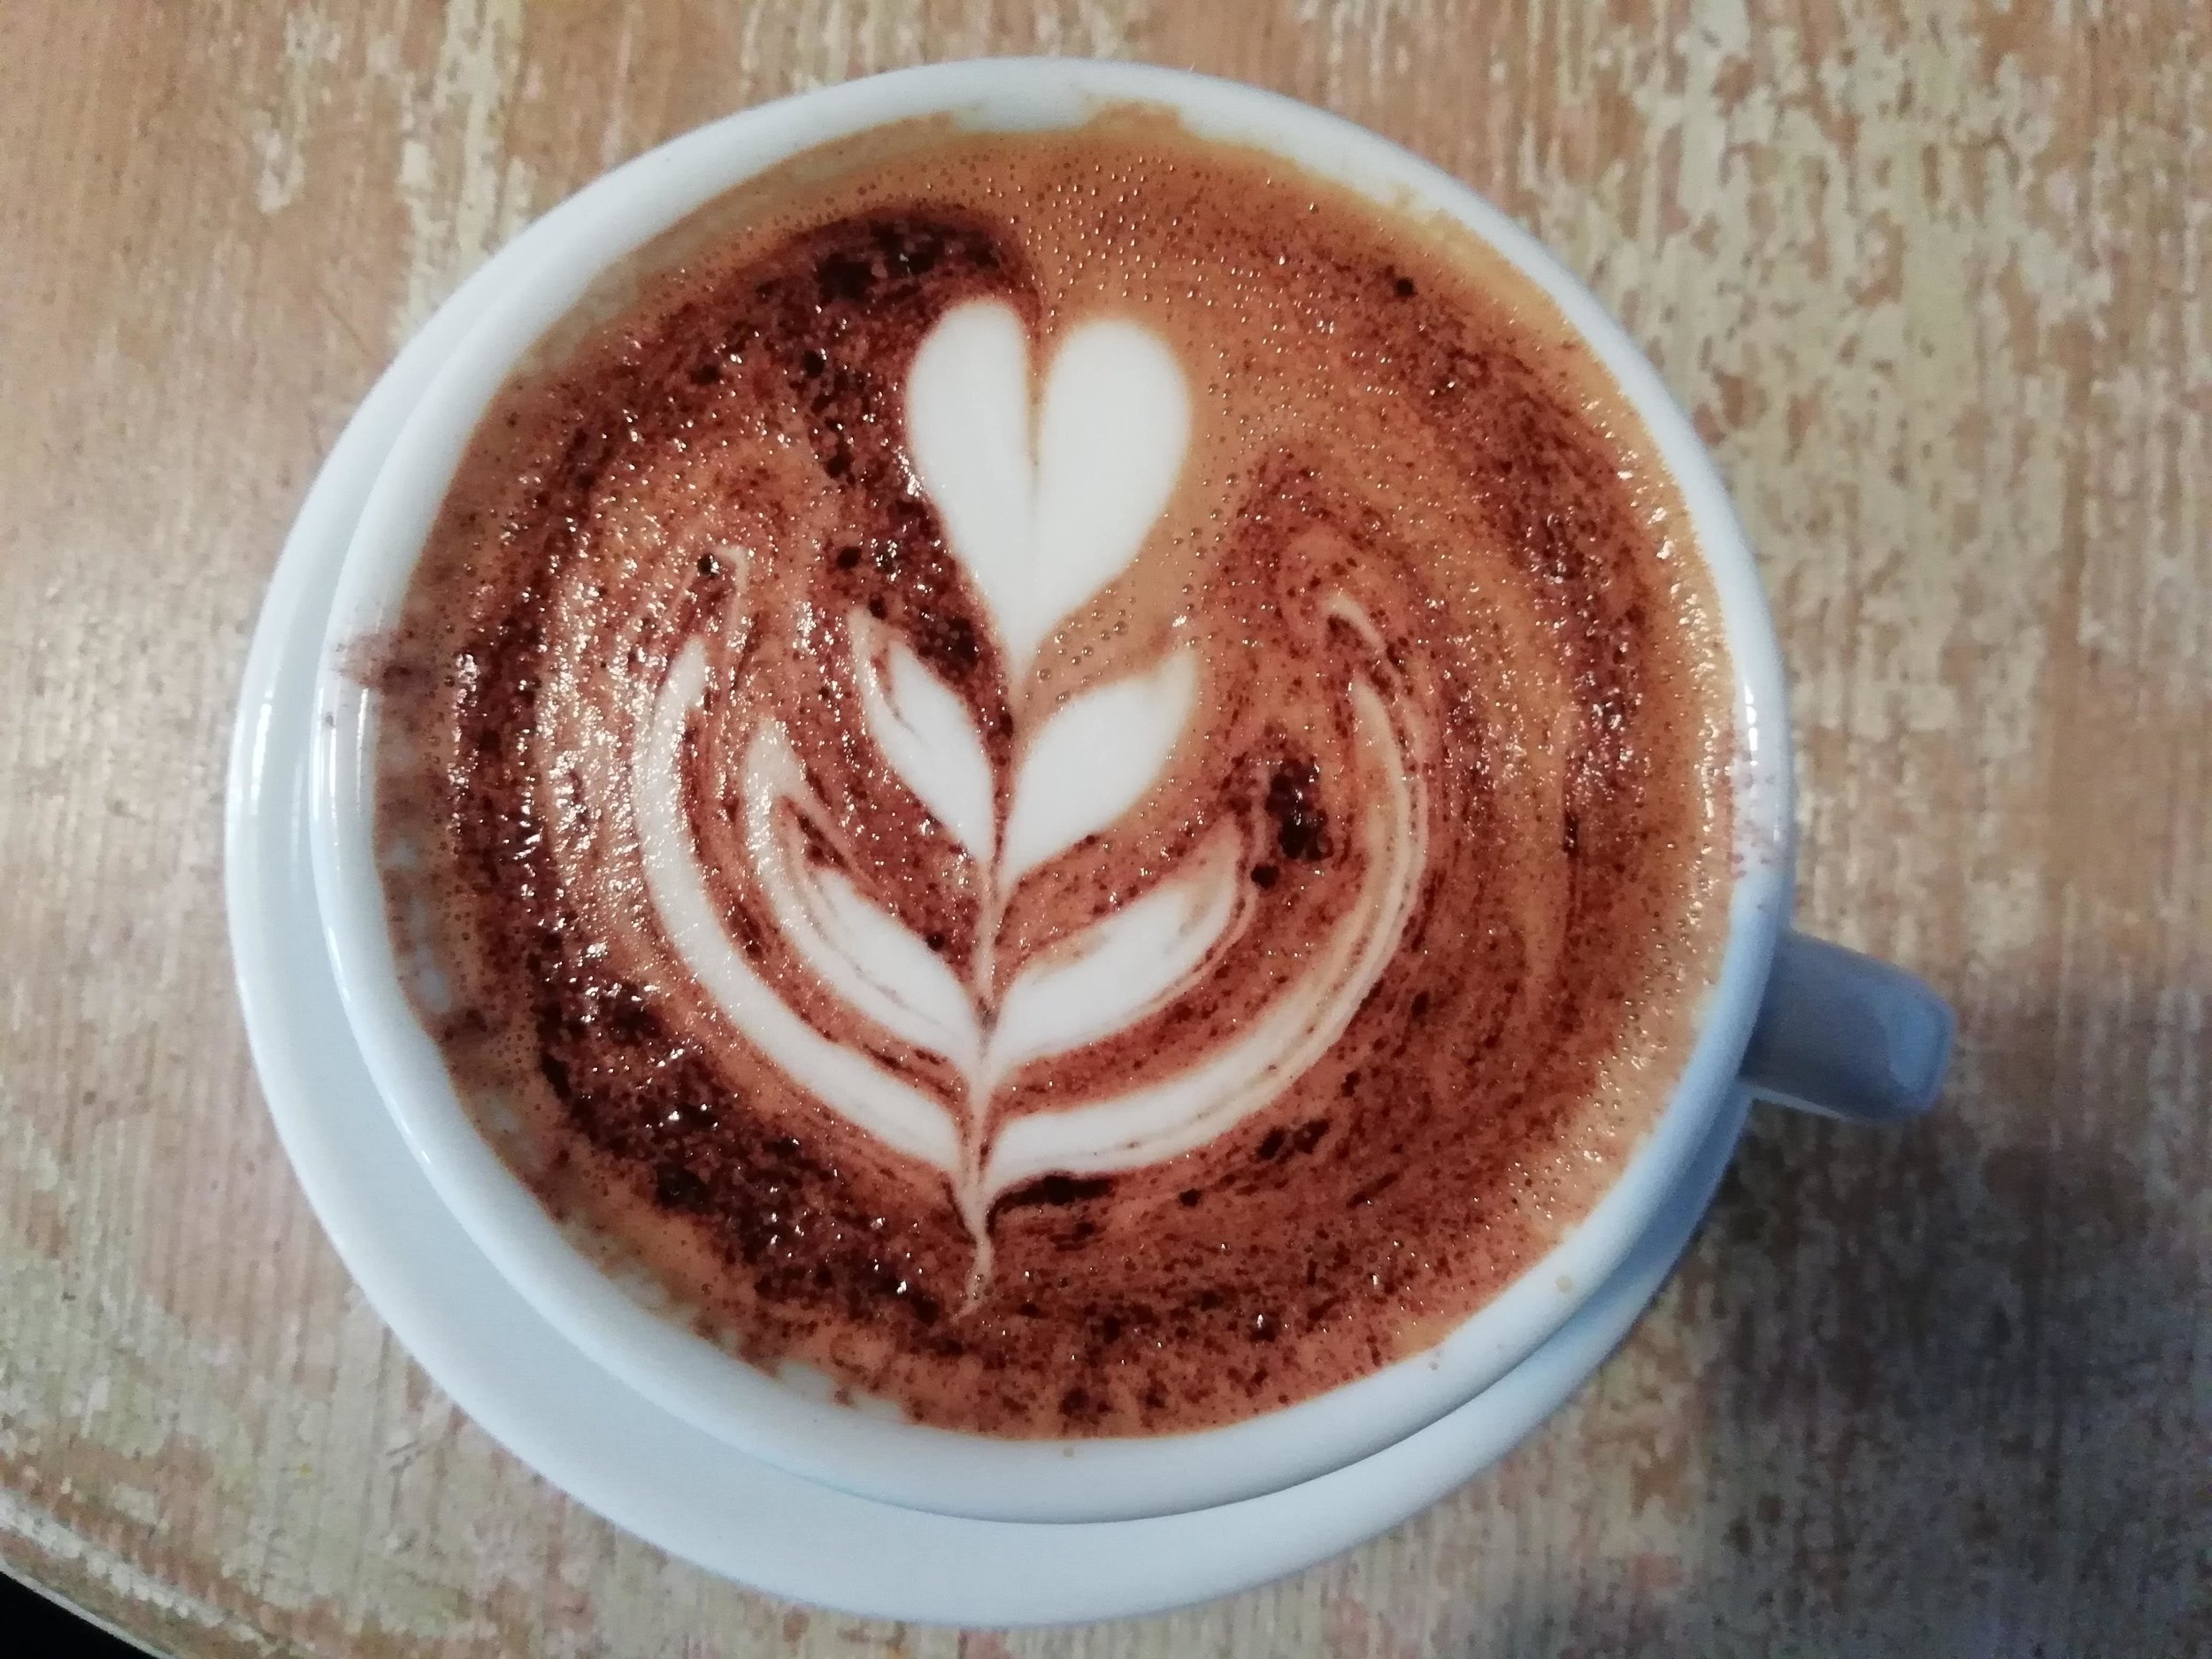 Brewlab's hot chocolate